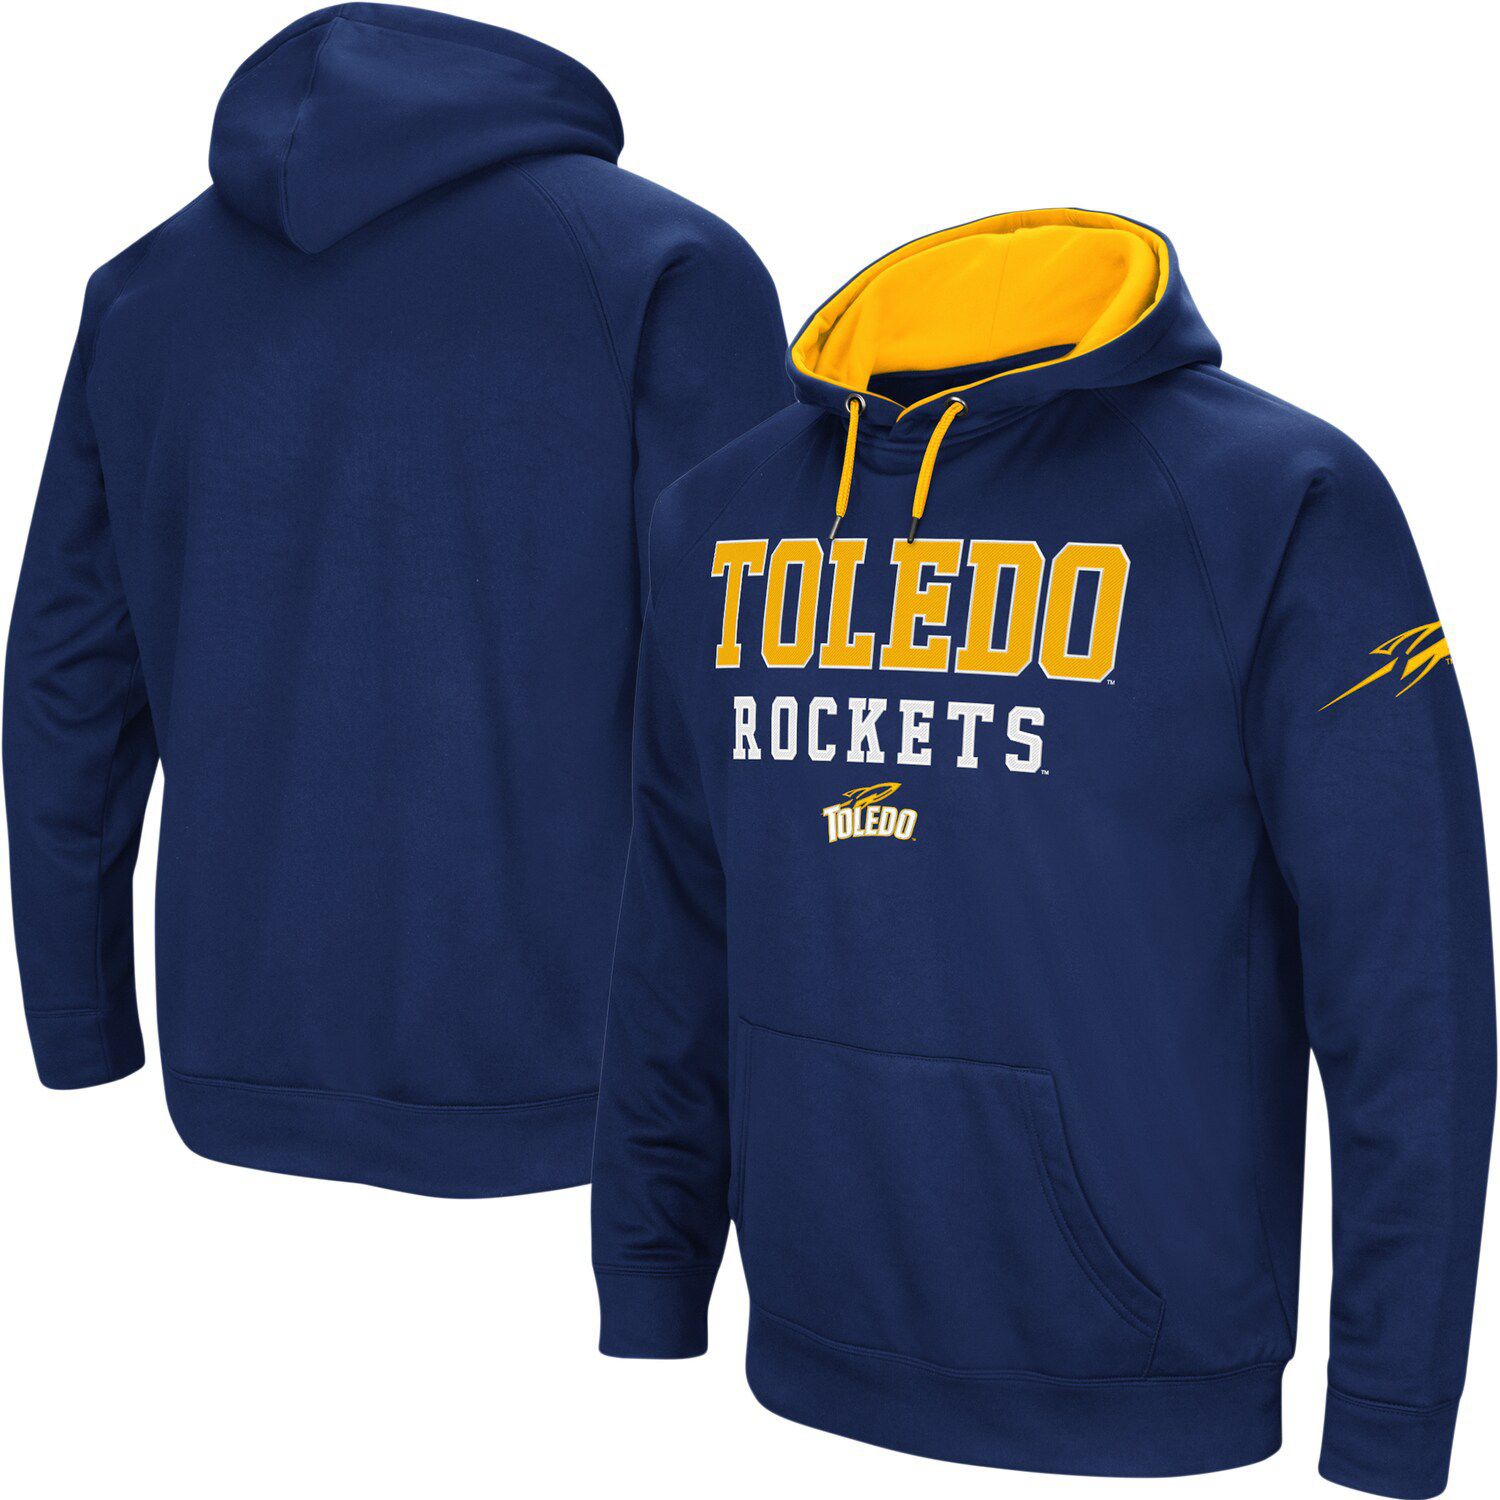 toledo rockets sweatshirt